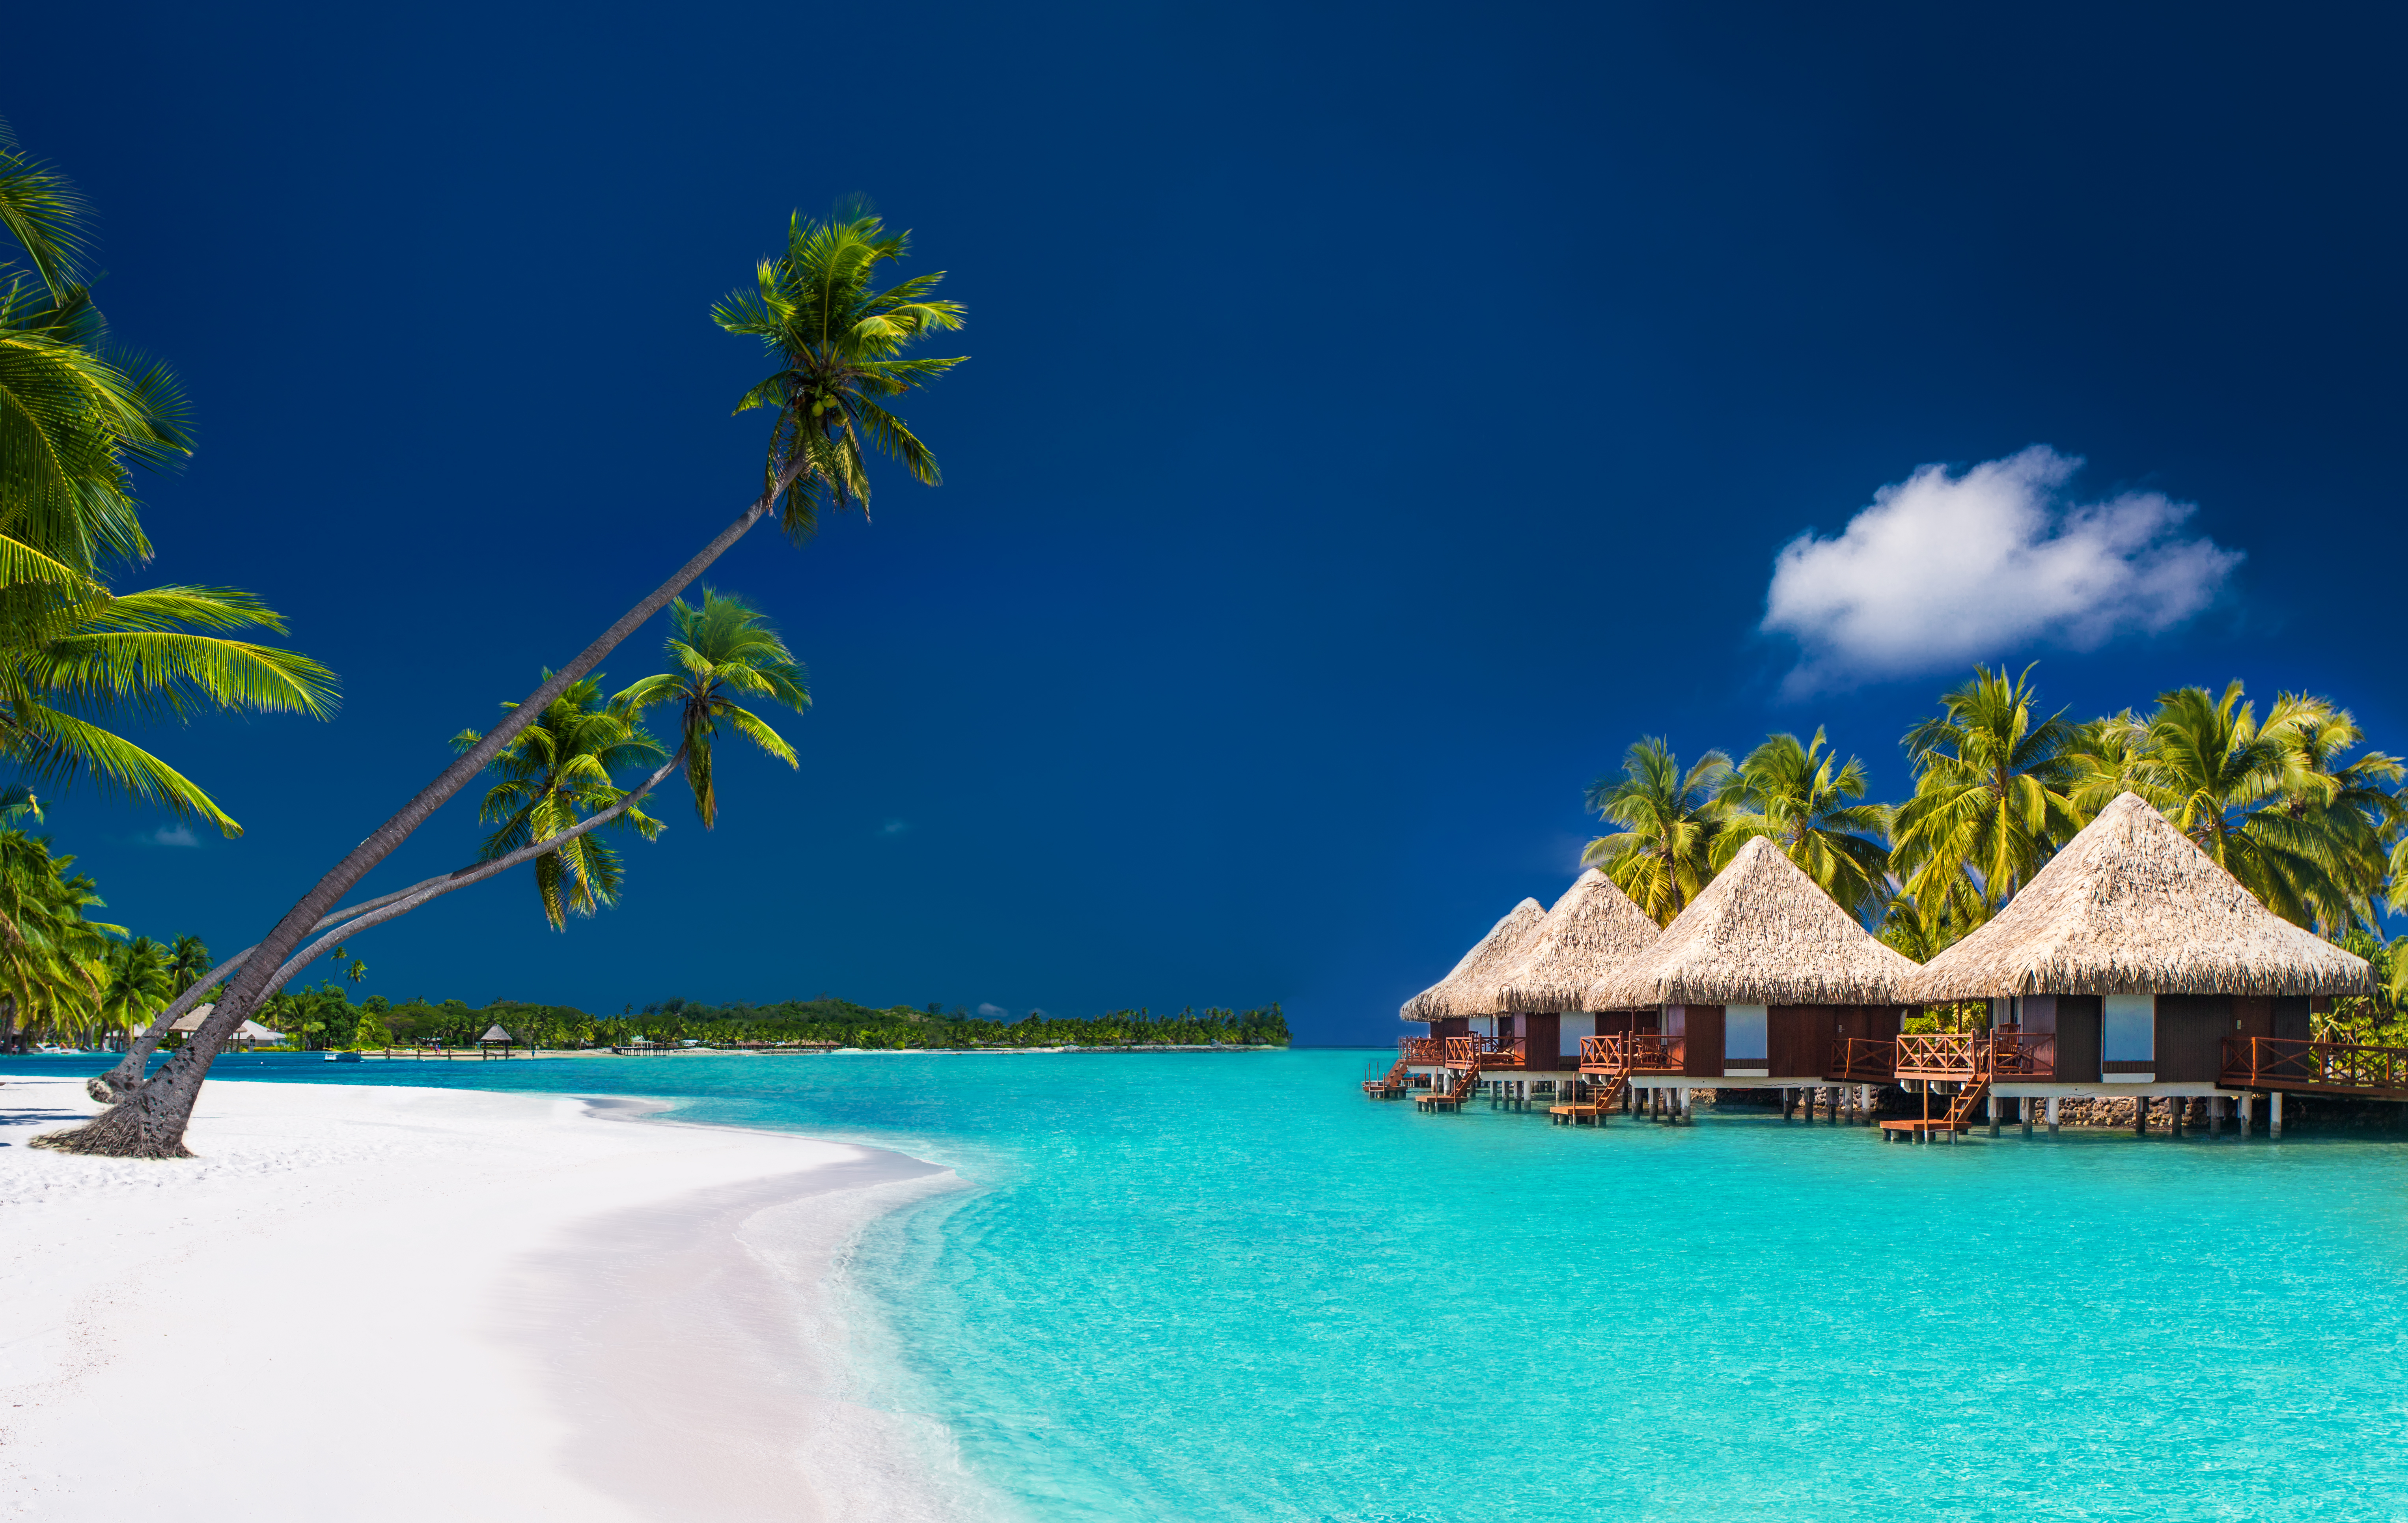 Villas au bord de la plage à Bora Bora | Source : Shutterstock